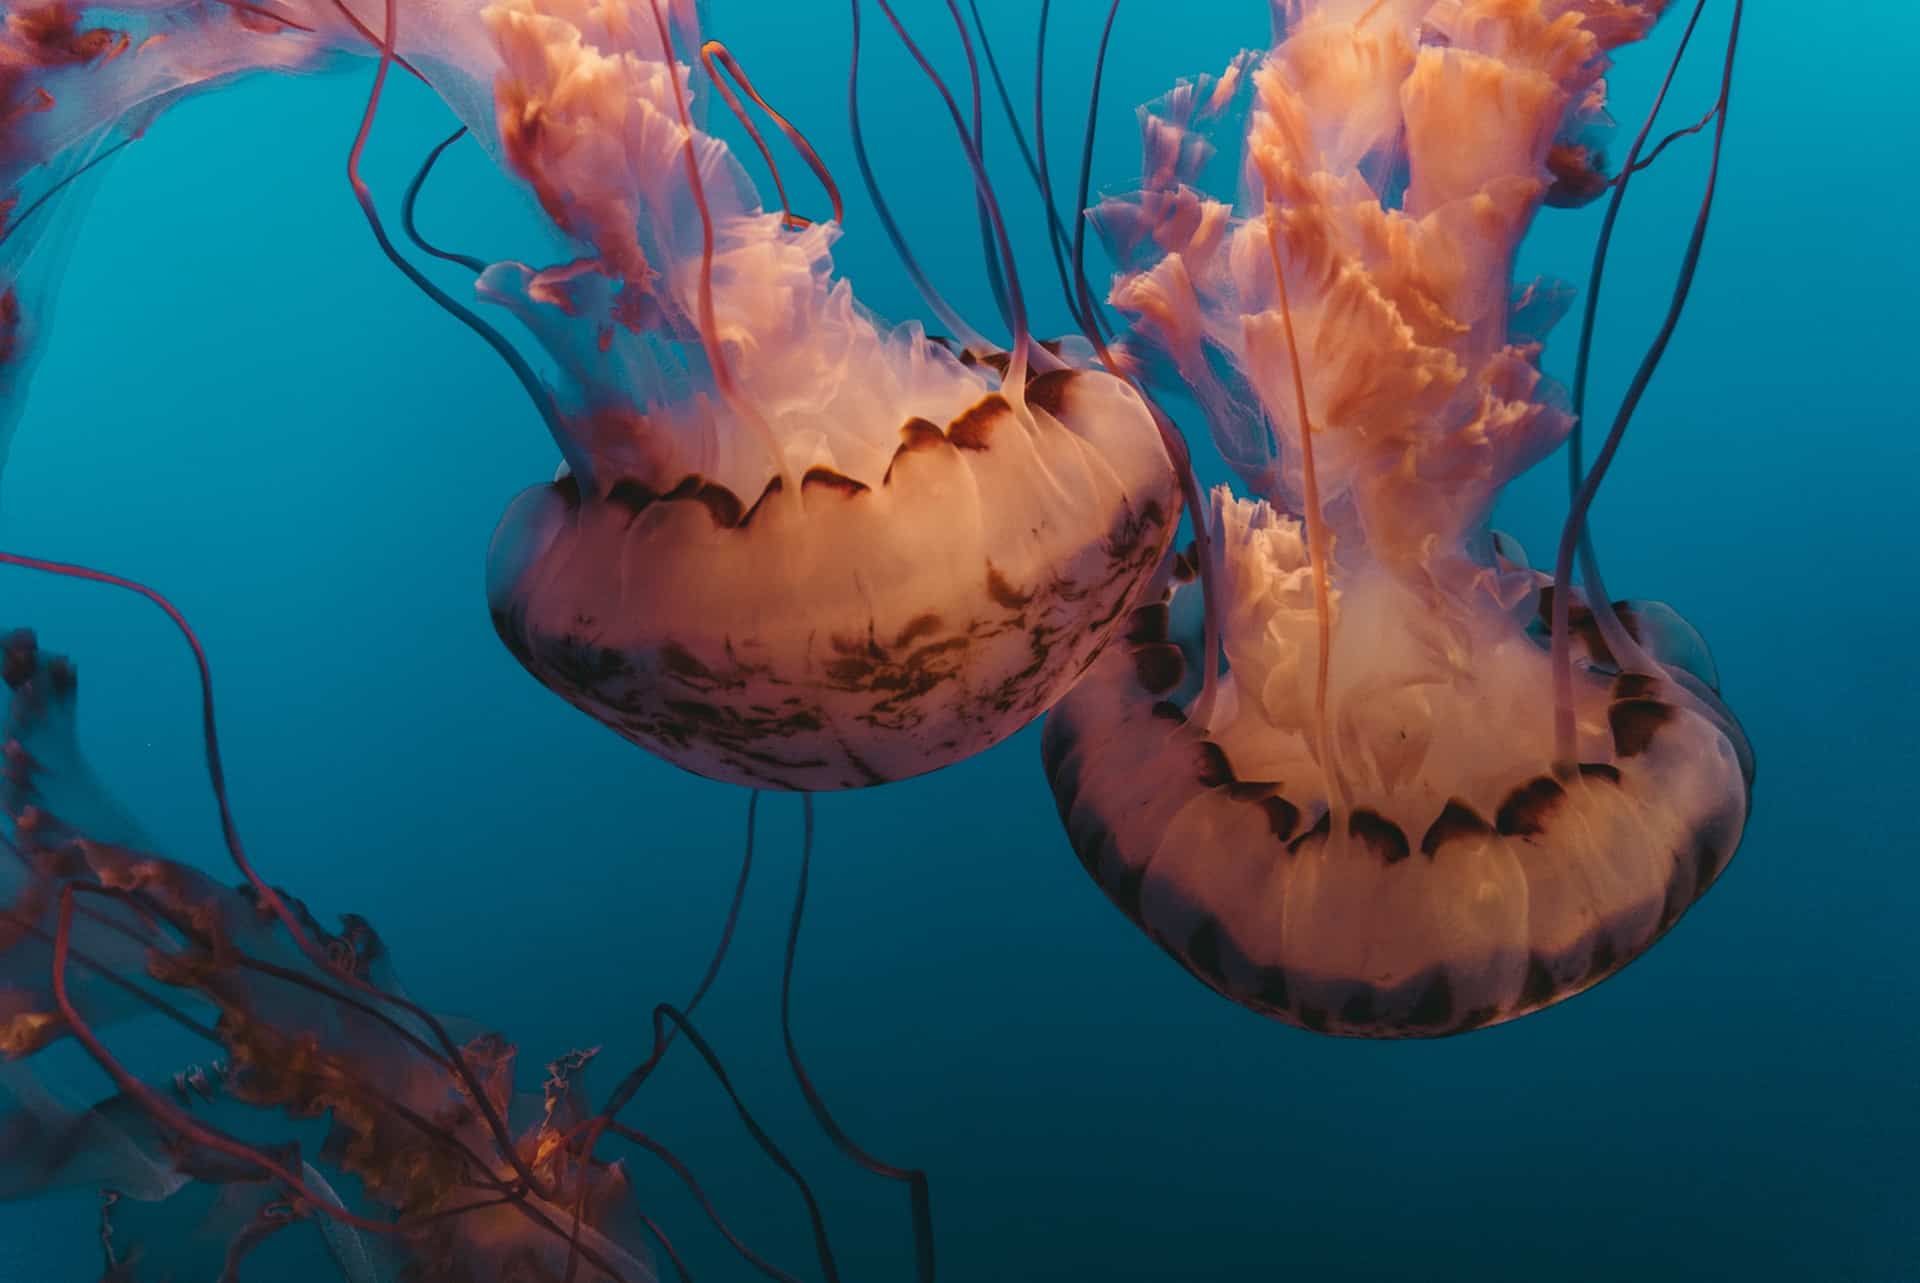 Best things to do in Monterey California - Chris Christensen - Jellyfish at Monterey Bay Aquarium by KAL VISUALS on Unsplash